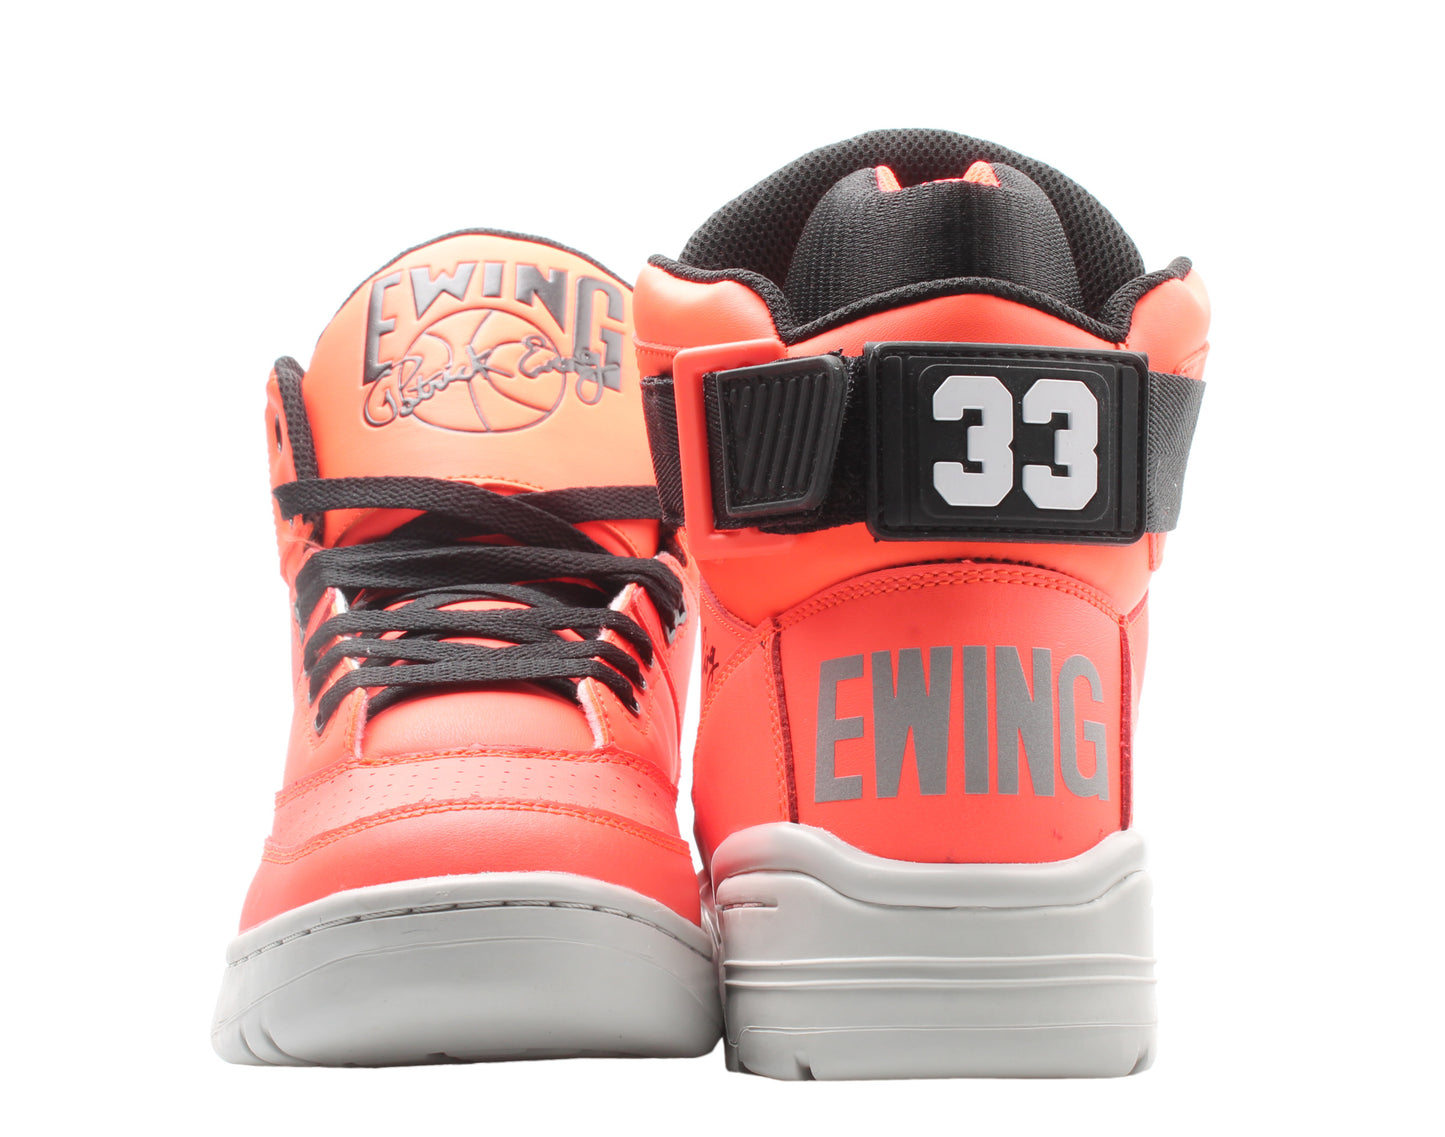 Ewing Athletics Ewing 33 Hi Alarm Men's Basketball Shoes